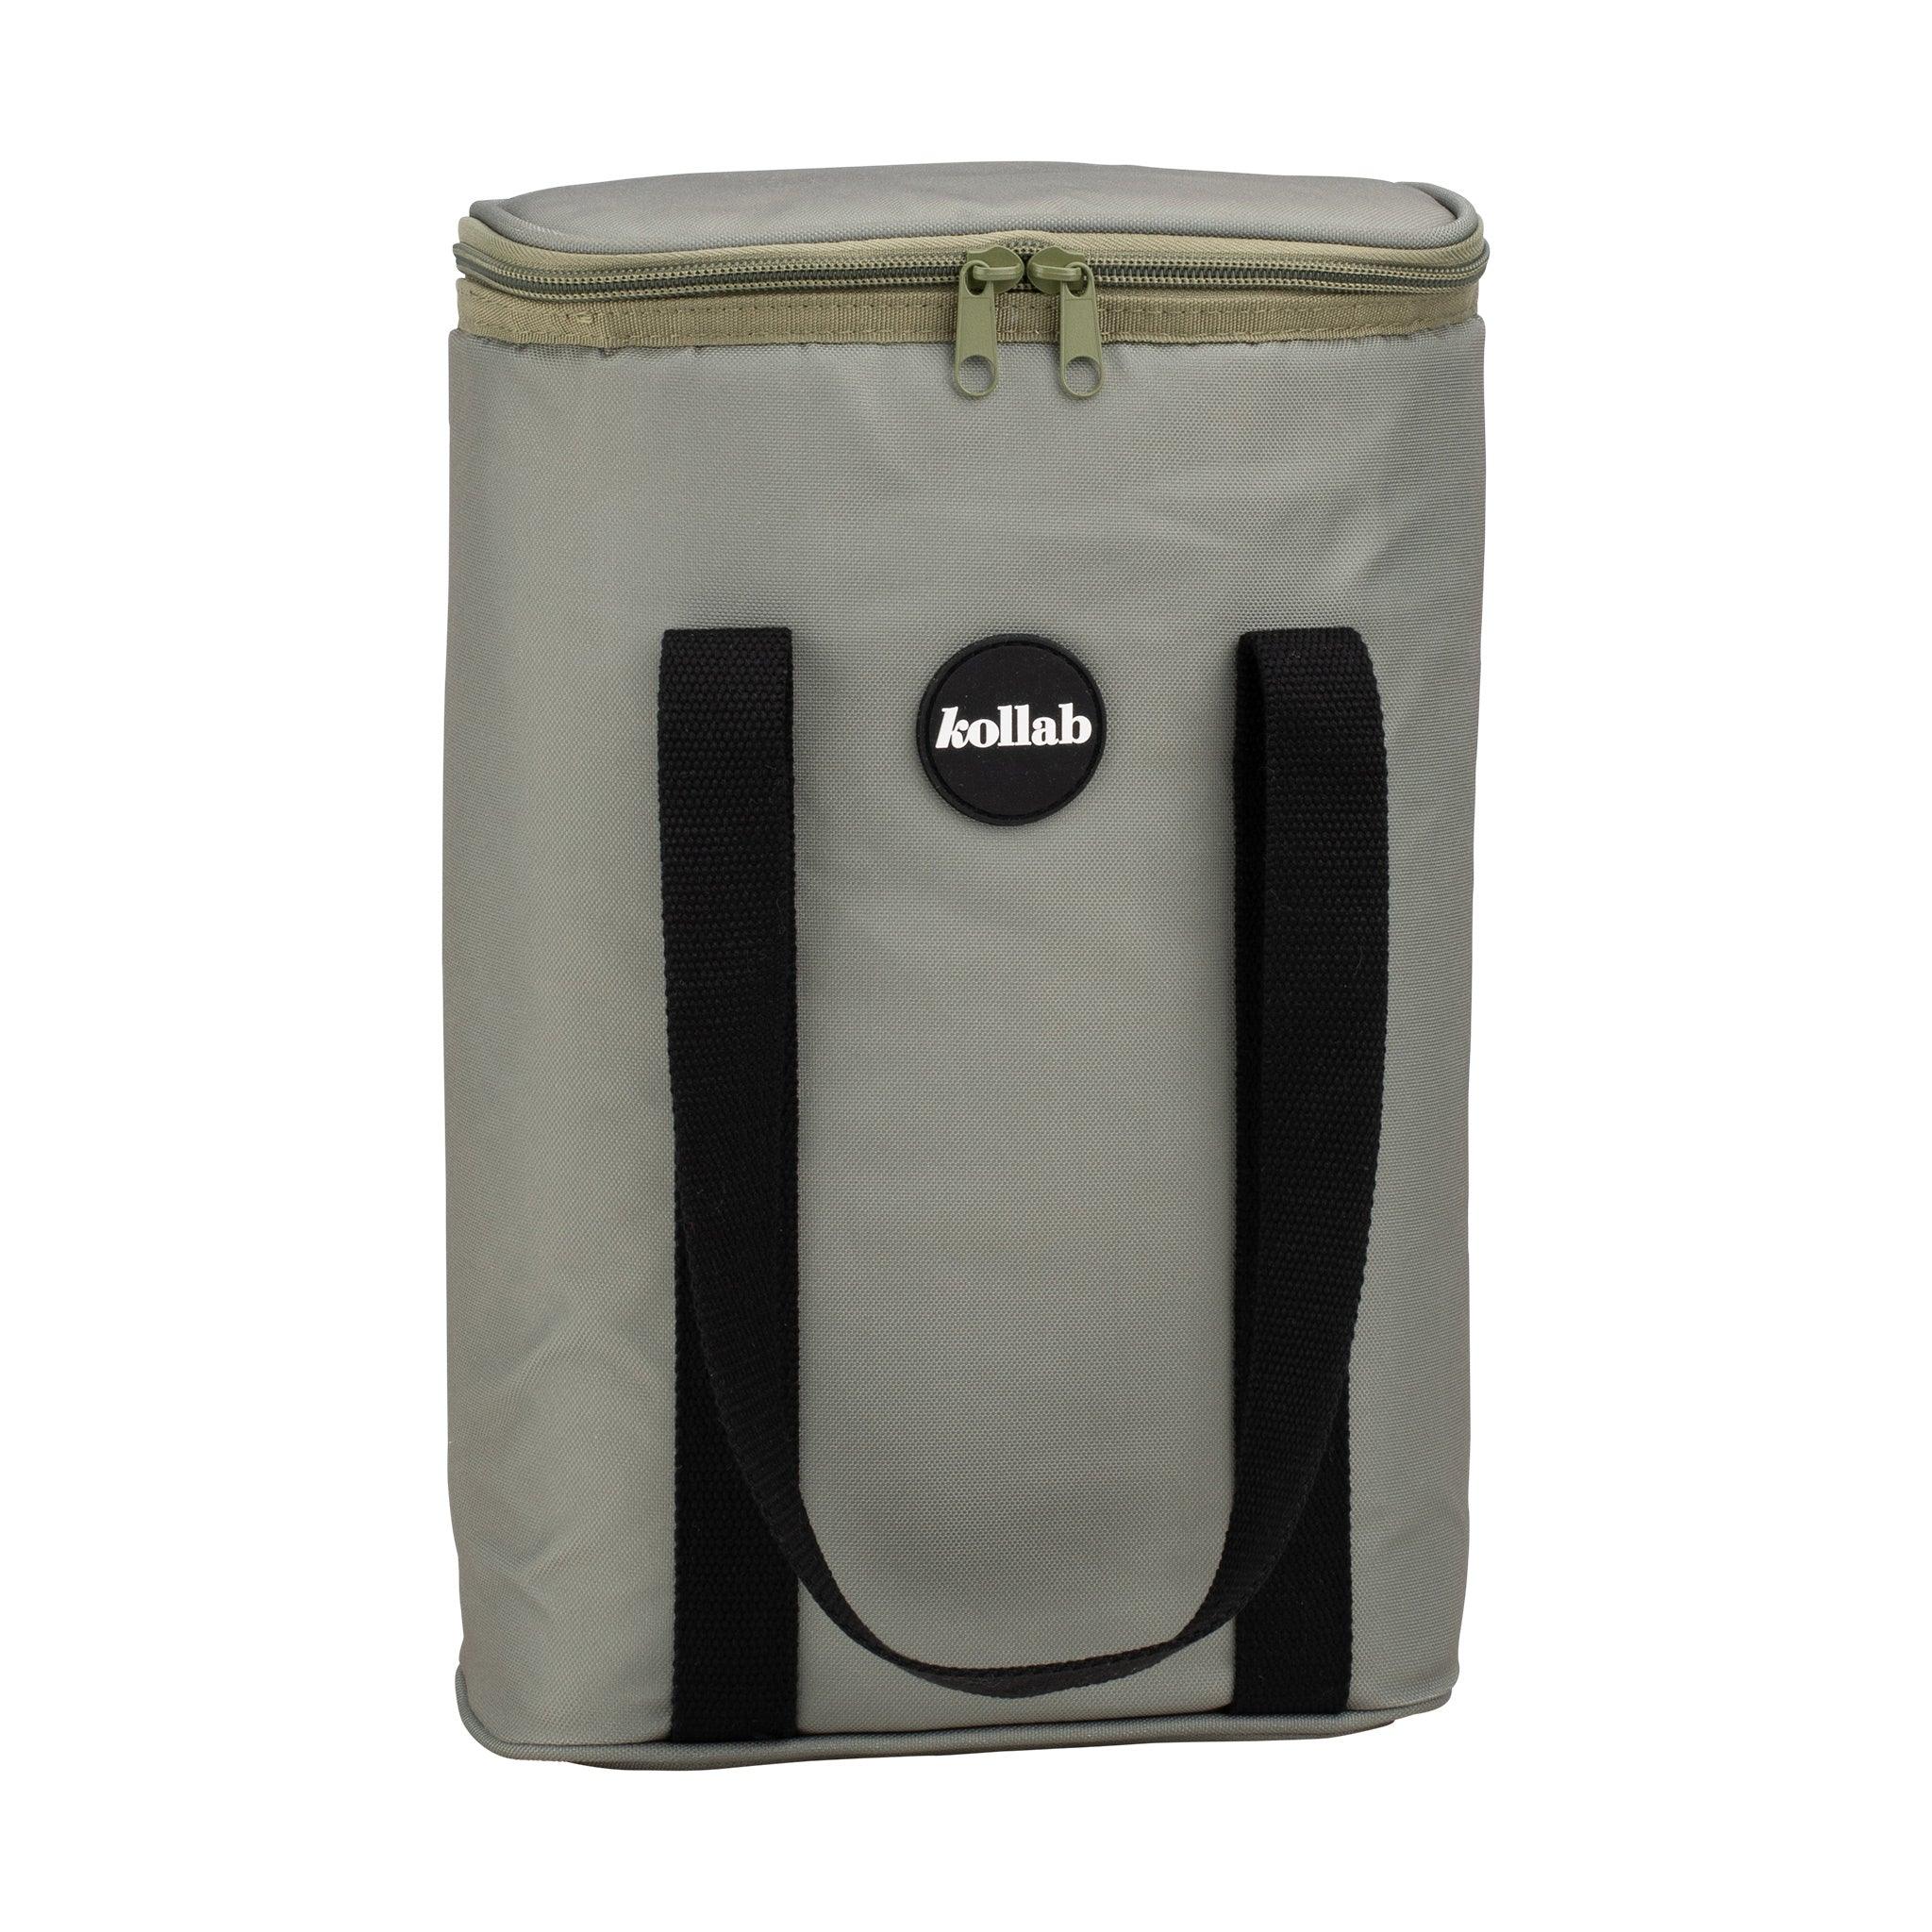 Kollab Holiday Wine Cooler Bag Khaki Black – Handbags from BJs Furniture Horsham